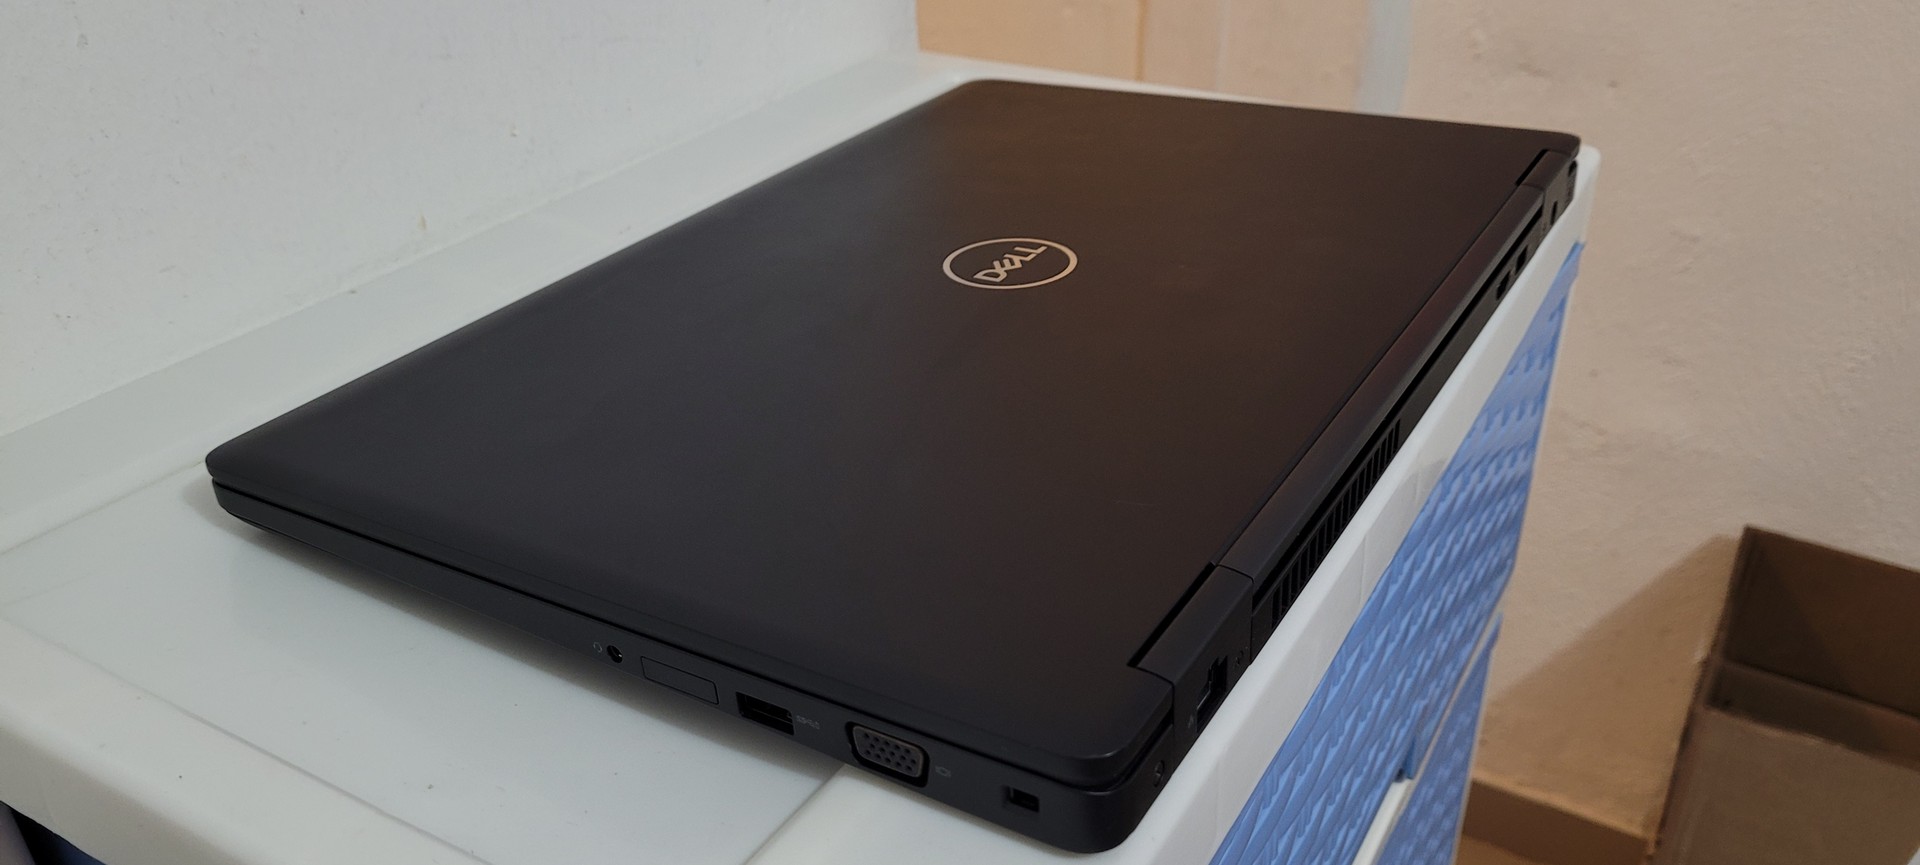 computadoras y laptops - Dell 5580 17 Pulg Core i5 7ma Gen Ram 8gb ddr4 Disco 256gb SSD Nvidea 6gb 2